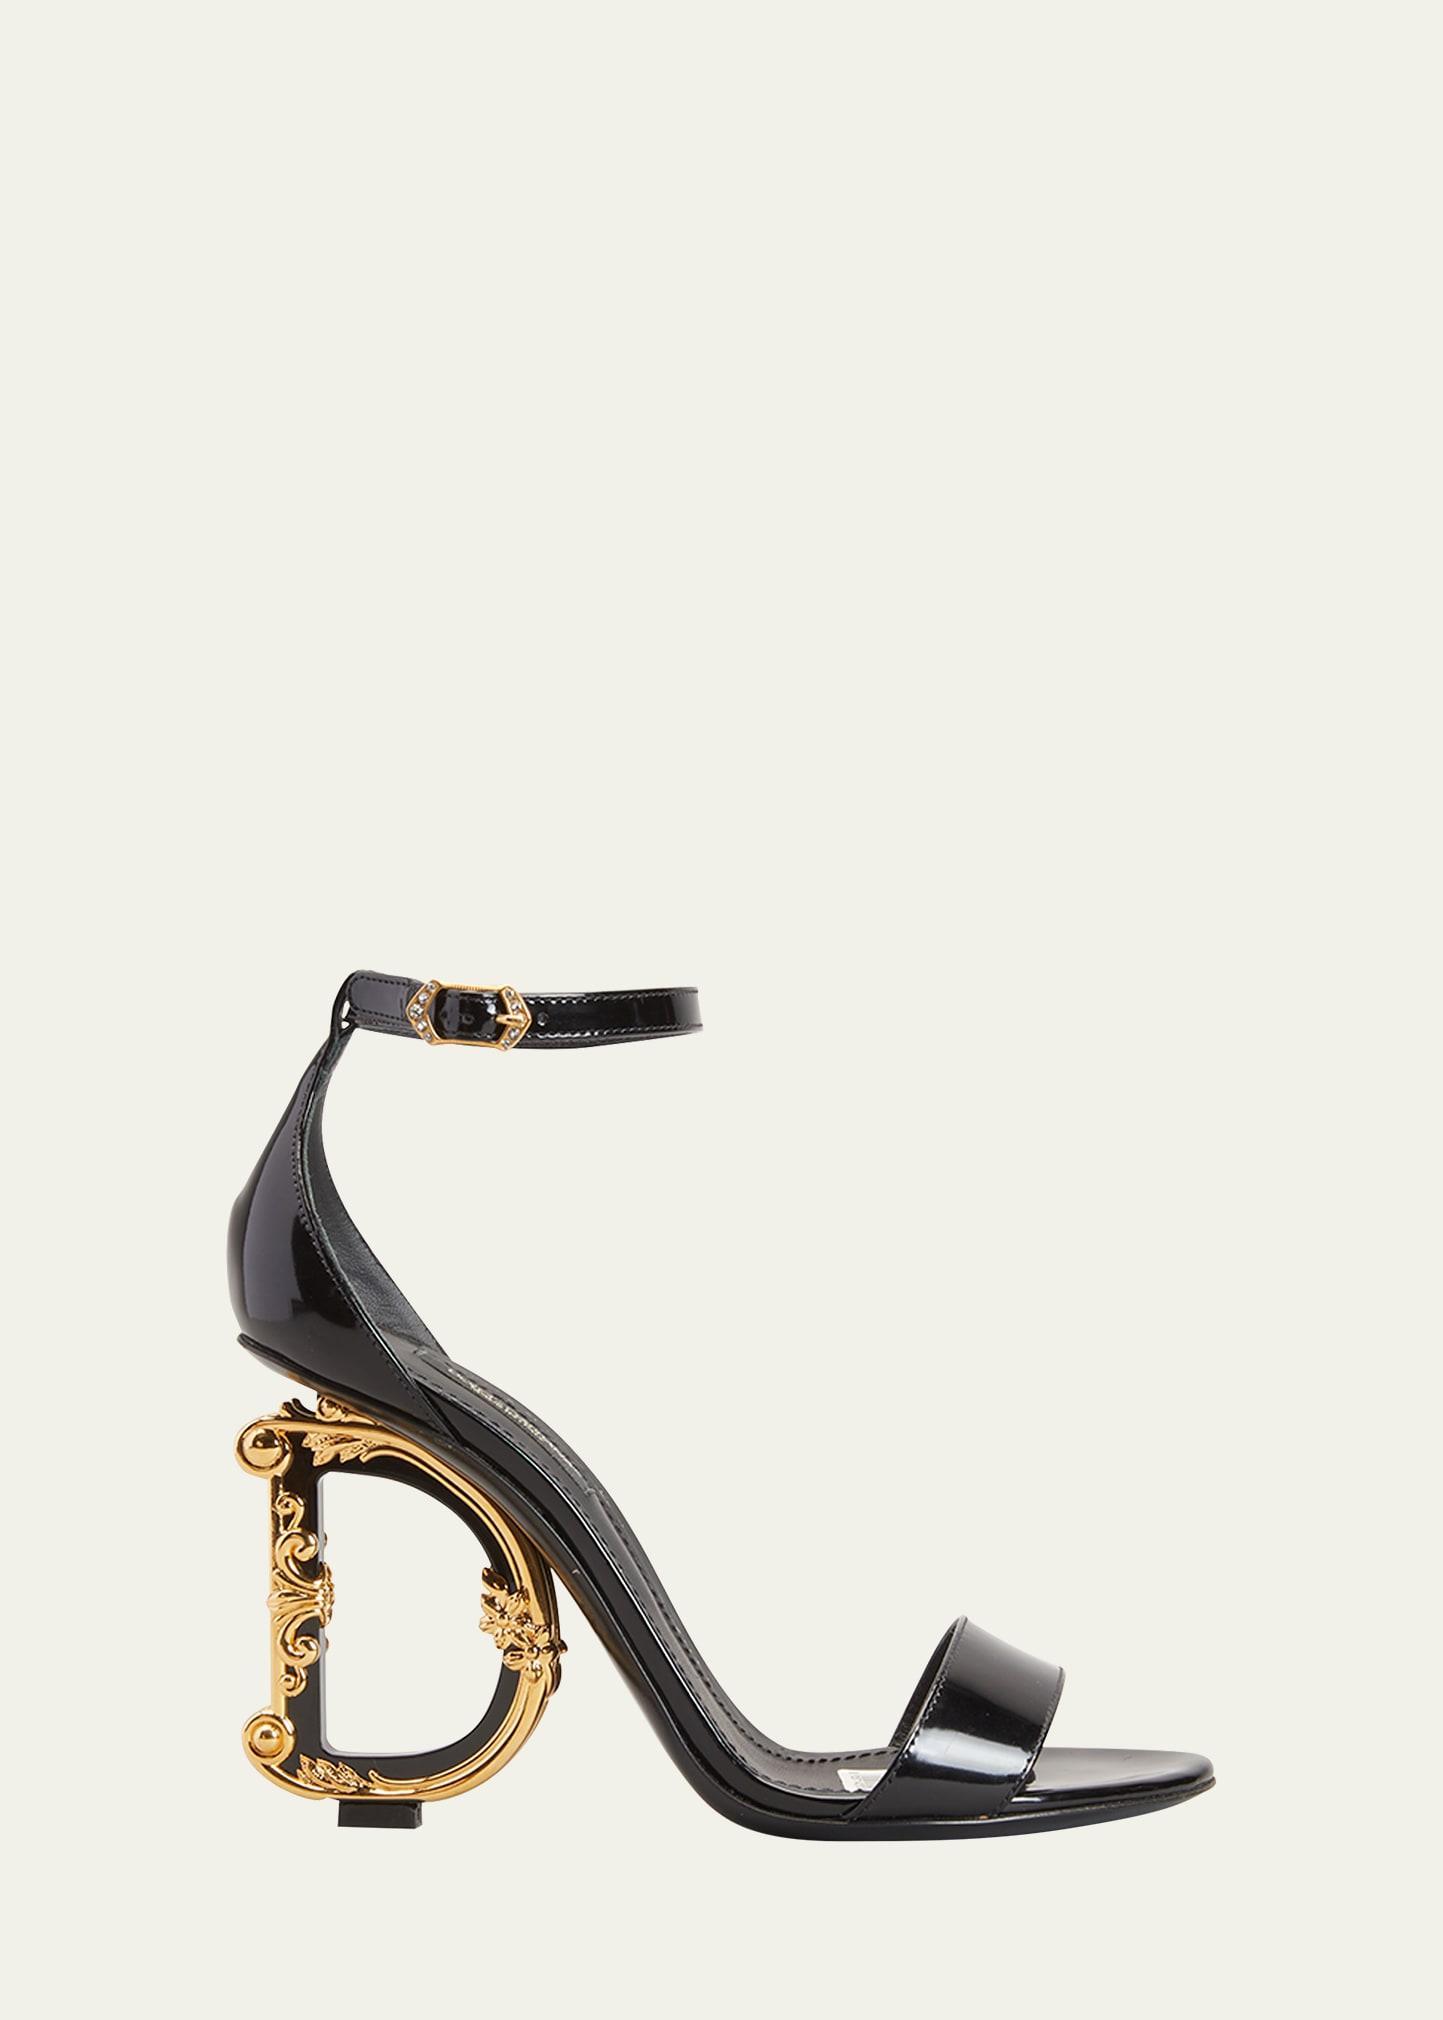 Dolce & Gabbana Keira Baroque DG Heel Sandal Product Image